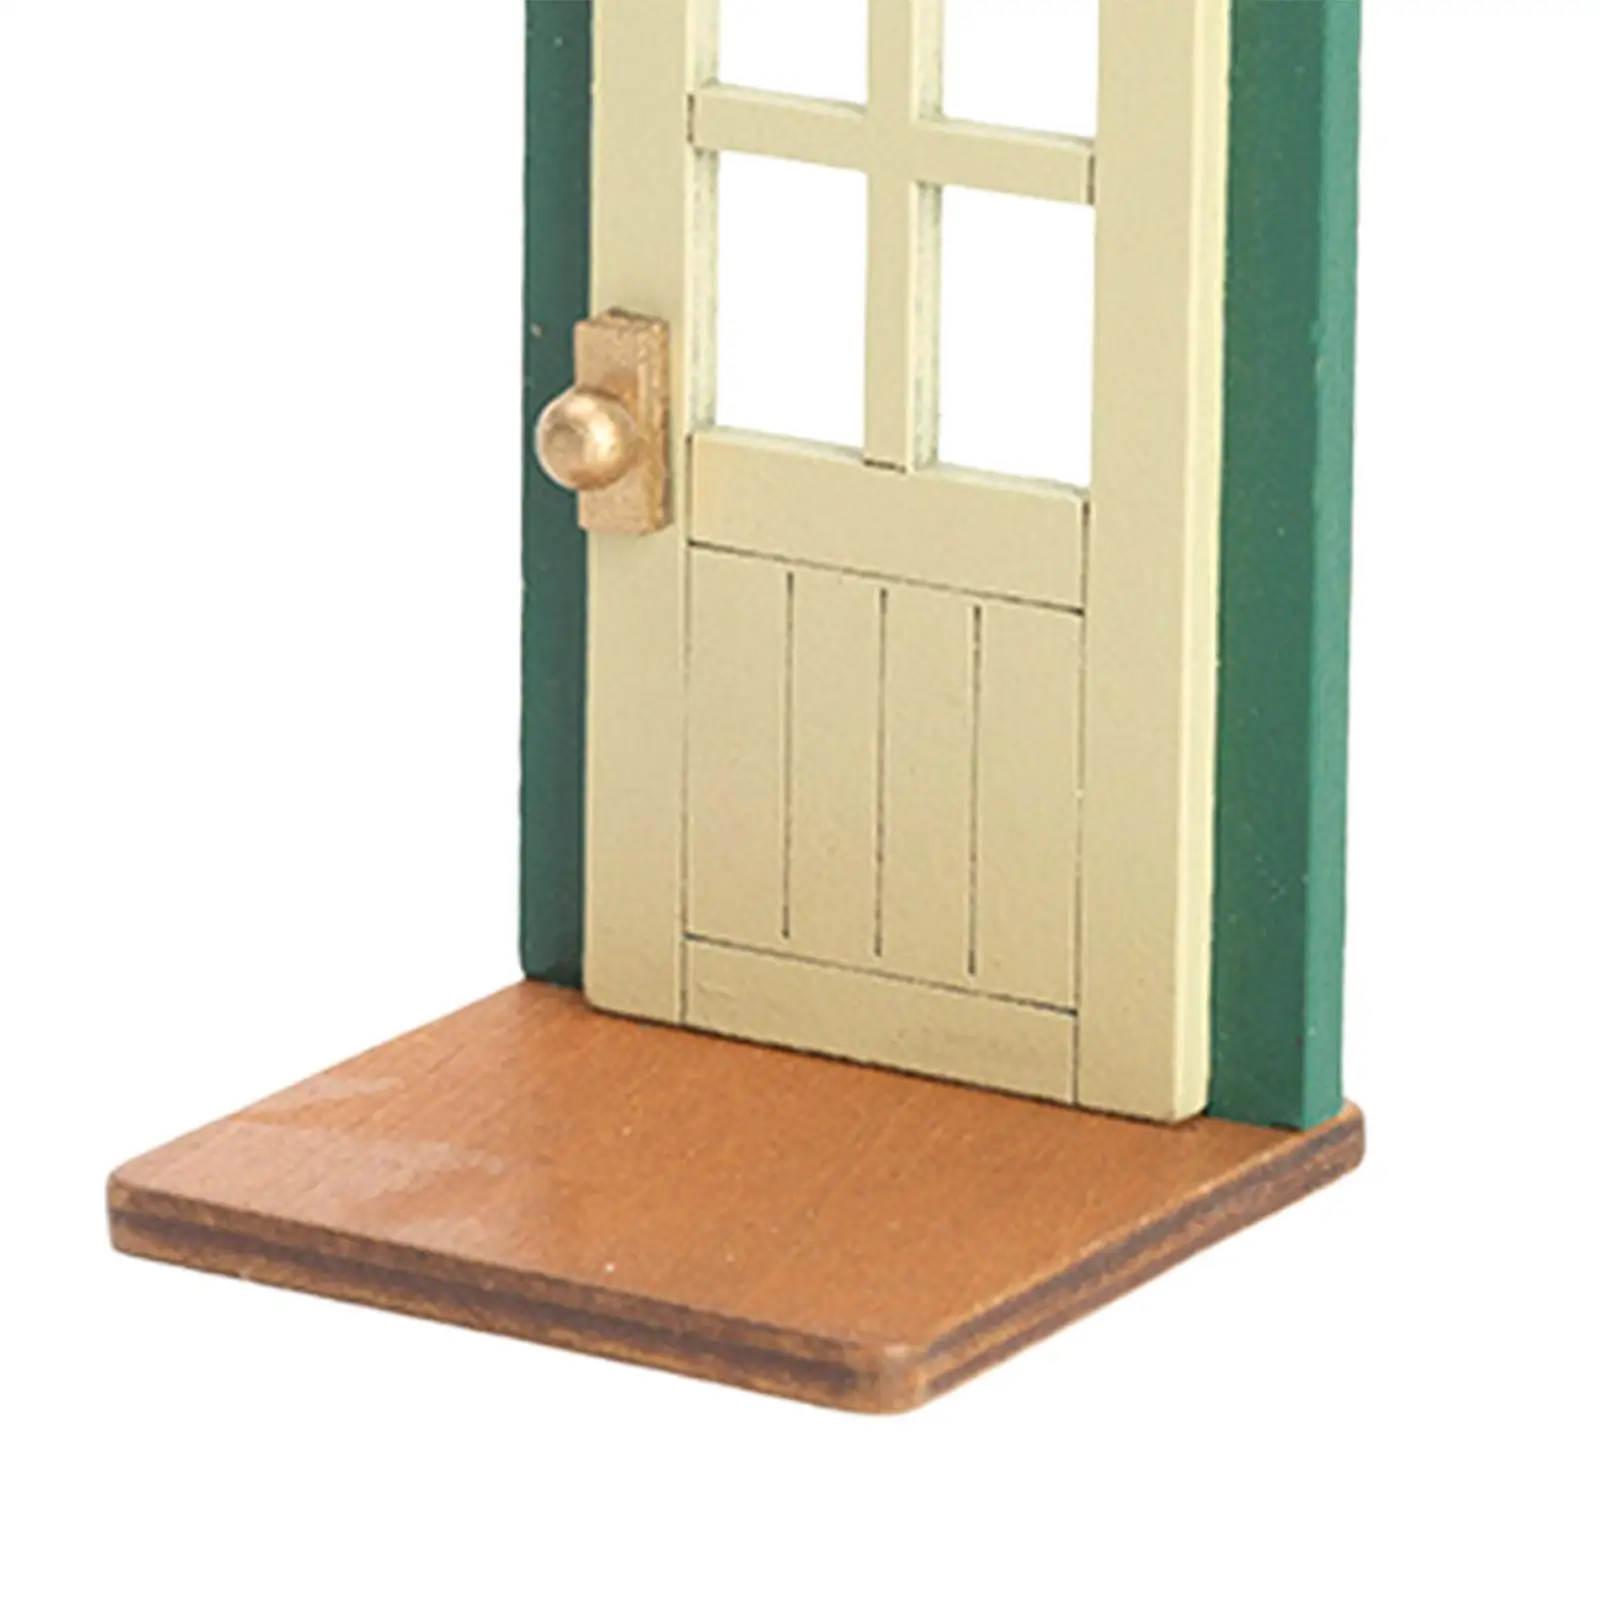 Dollhouse Miniature Door Miniature Dollhouse Furniture Scenery Supplies Children Living Room Decoration Preschool Dollhouse Door